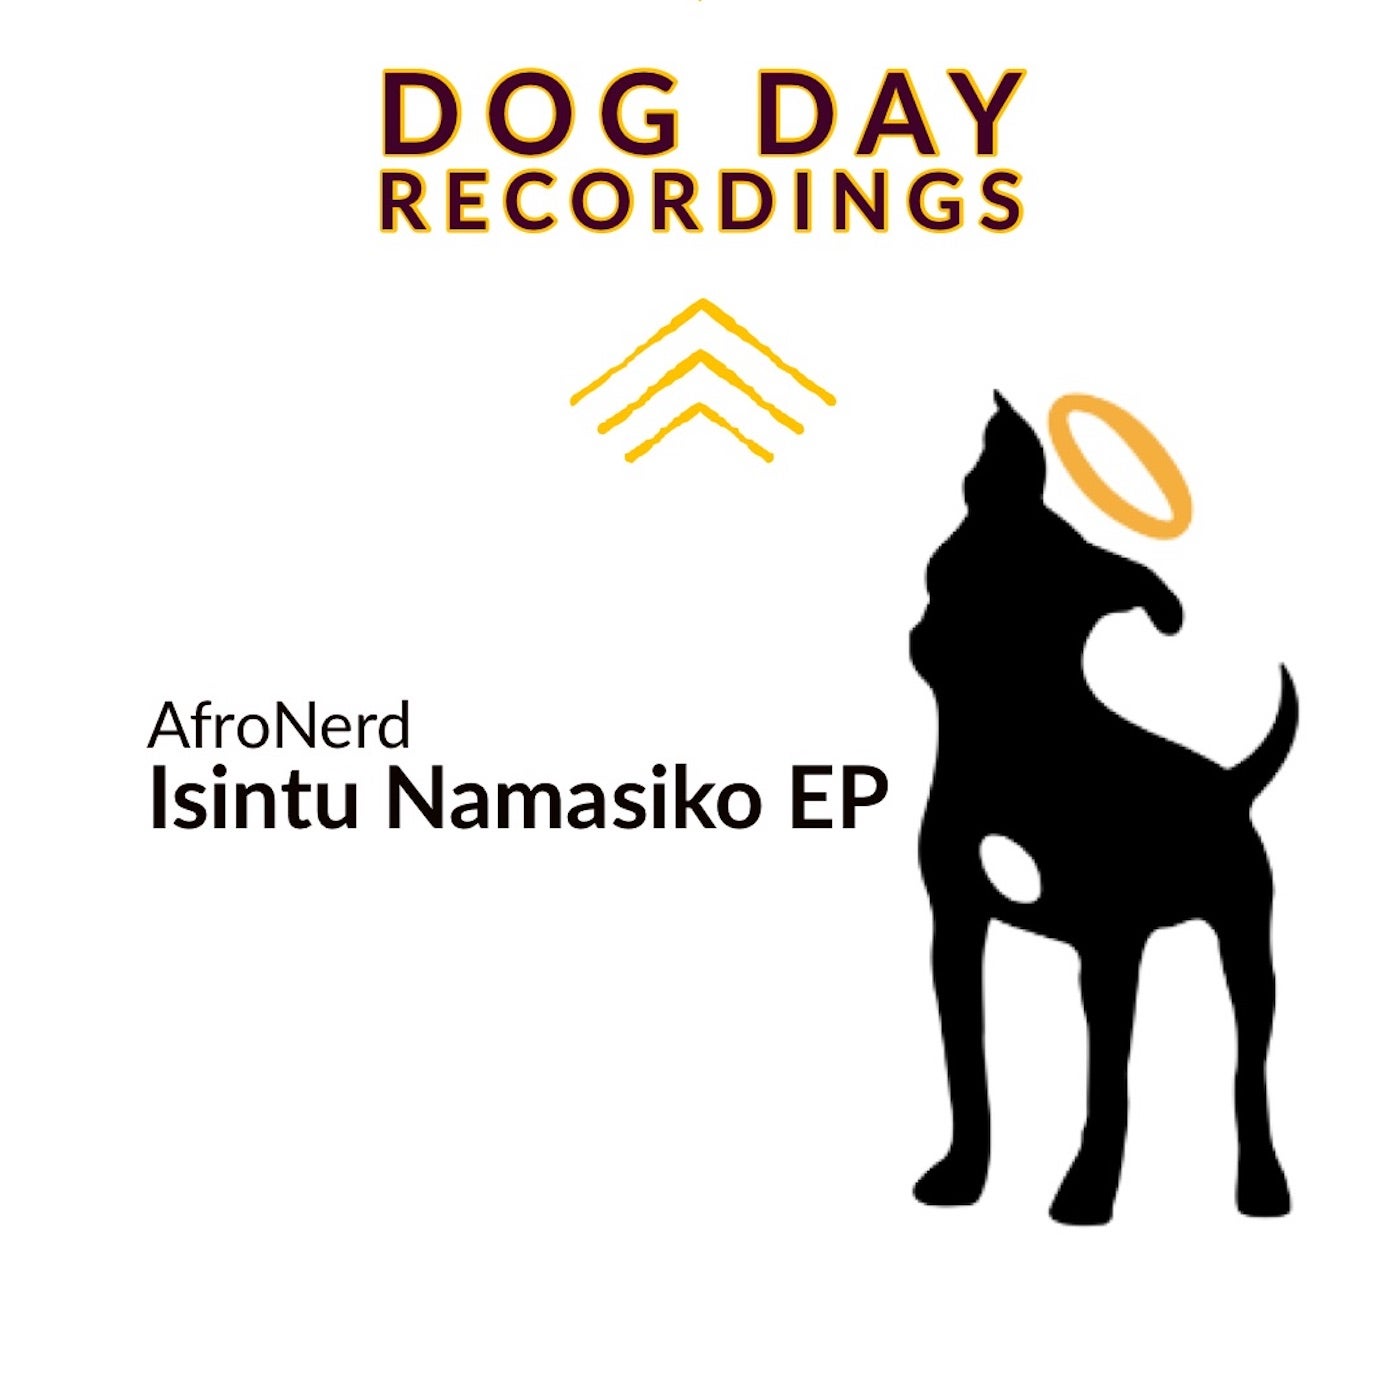 Isintu Namasiko EP